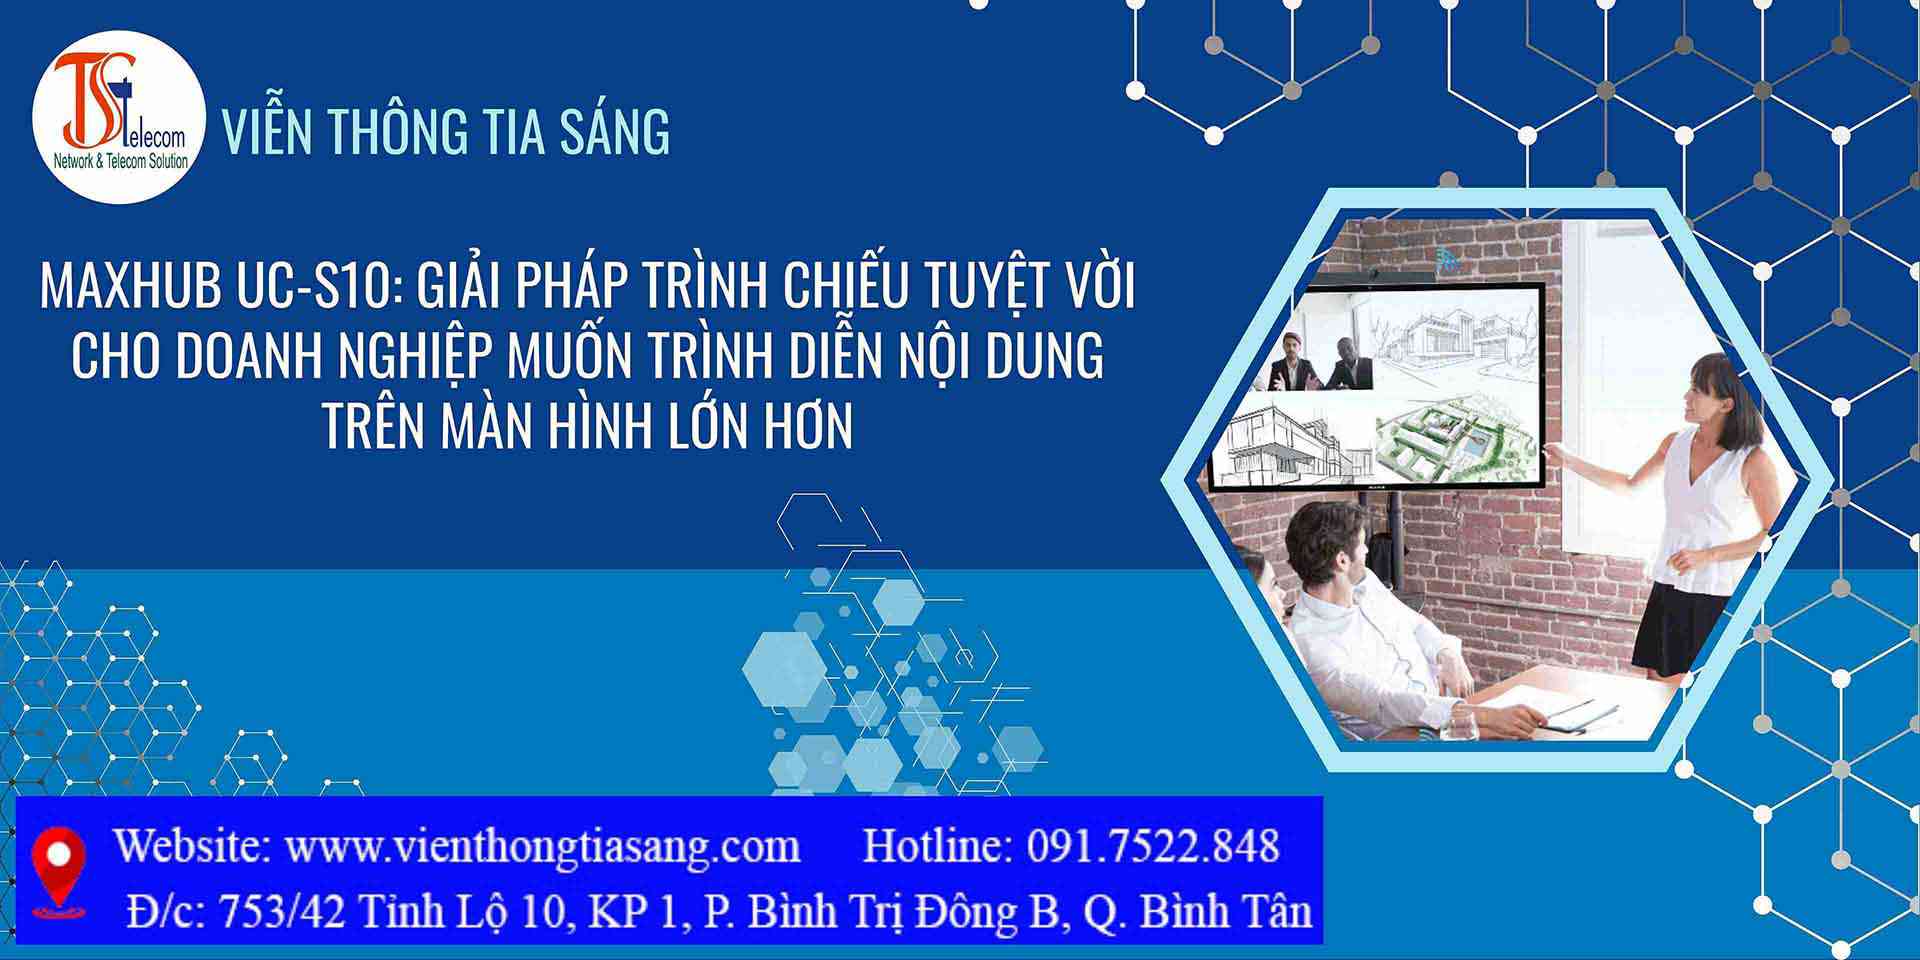 Maxhub-Uc-s10-Giai-Phap-Trinh-Chieu-Tuyet-Voi-Cho-Doanh-Nghiep-Muon-Trinh-Dien-Noi-Dung-Tren-Man-Hinh-Lon-Hon.jpg